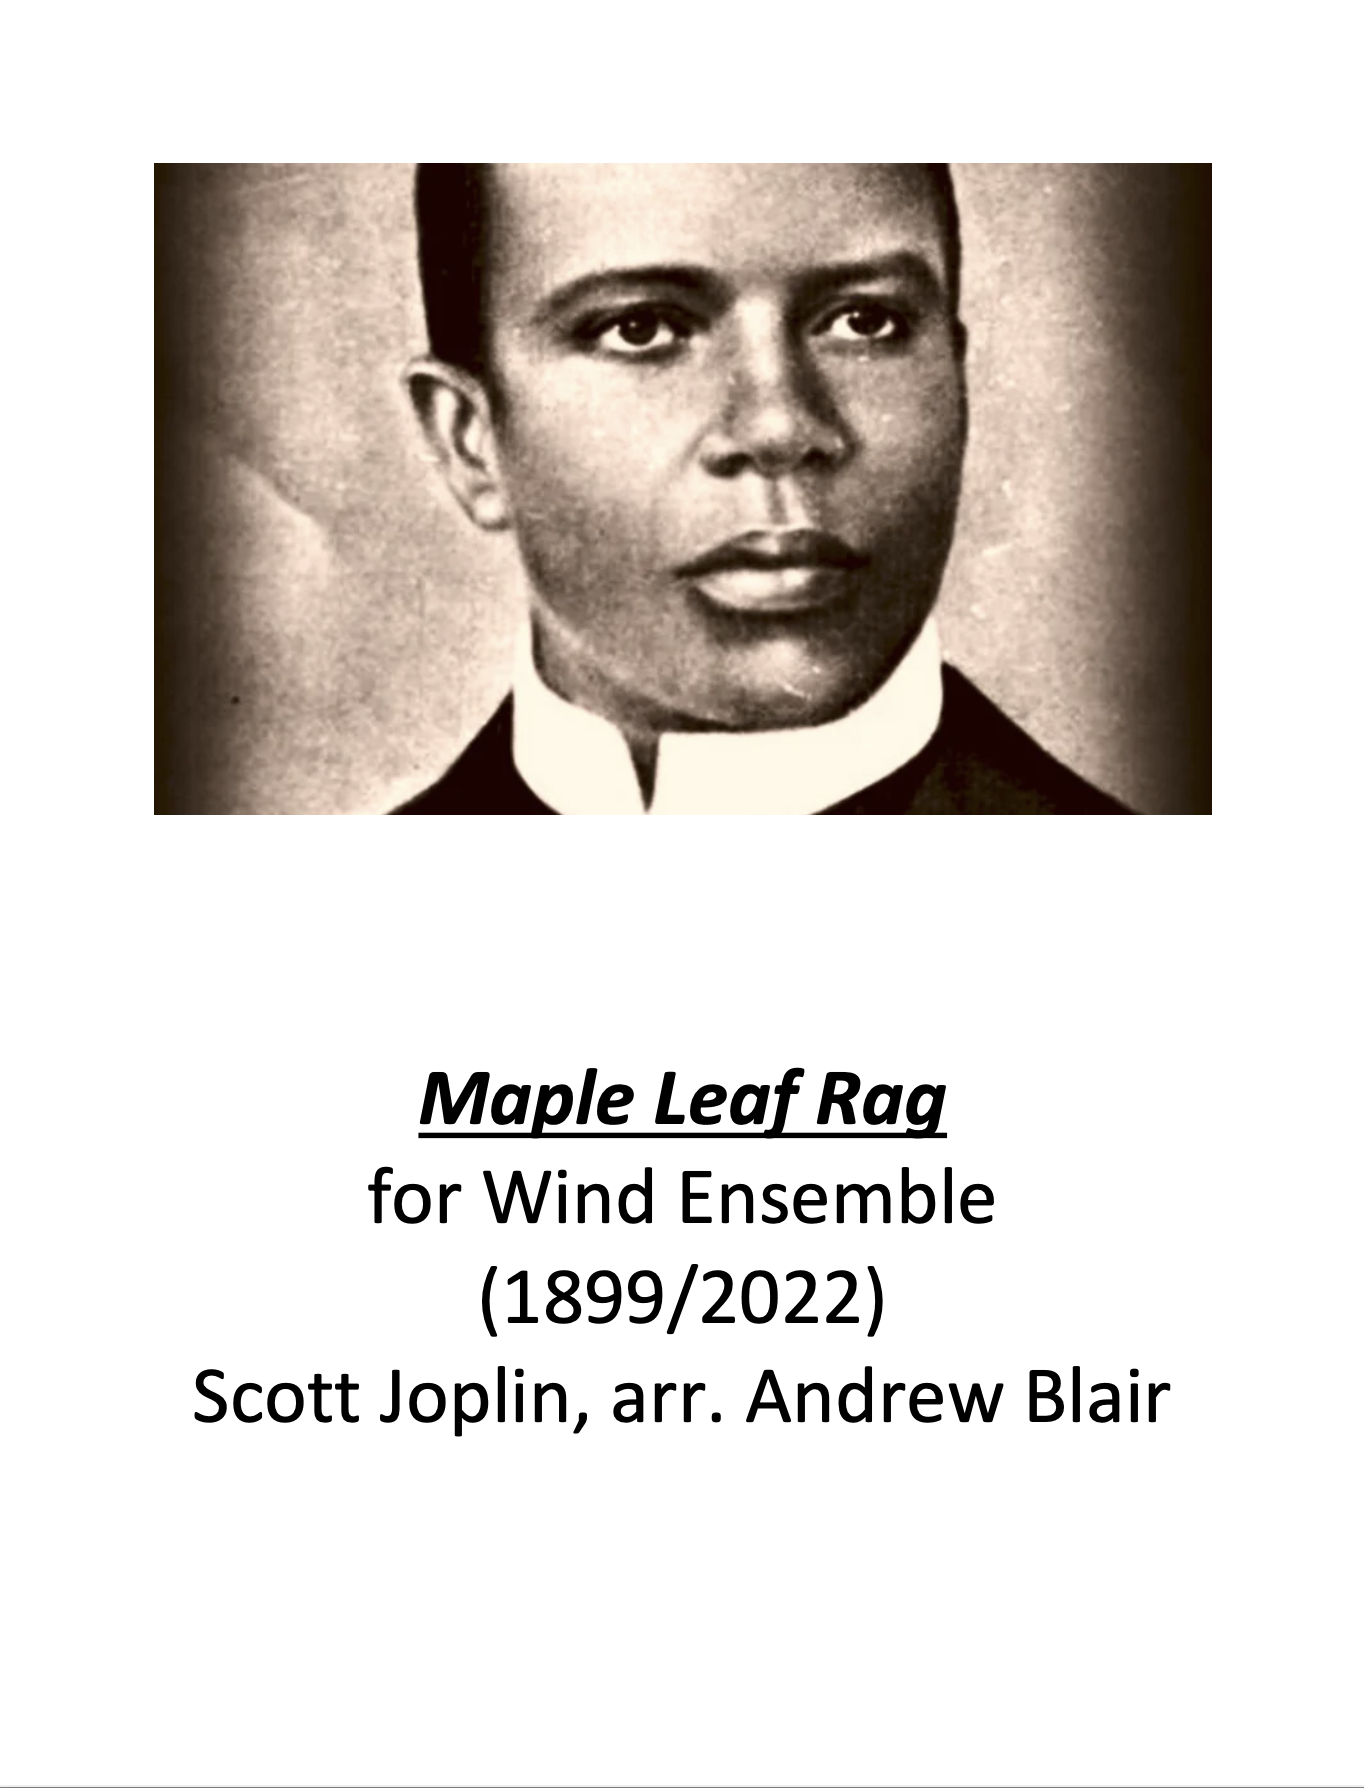 Maple Leaf Rag by Joplin, arr. Andrew Blair